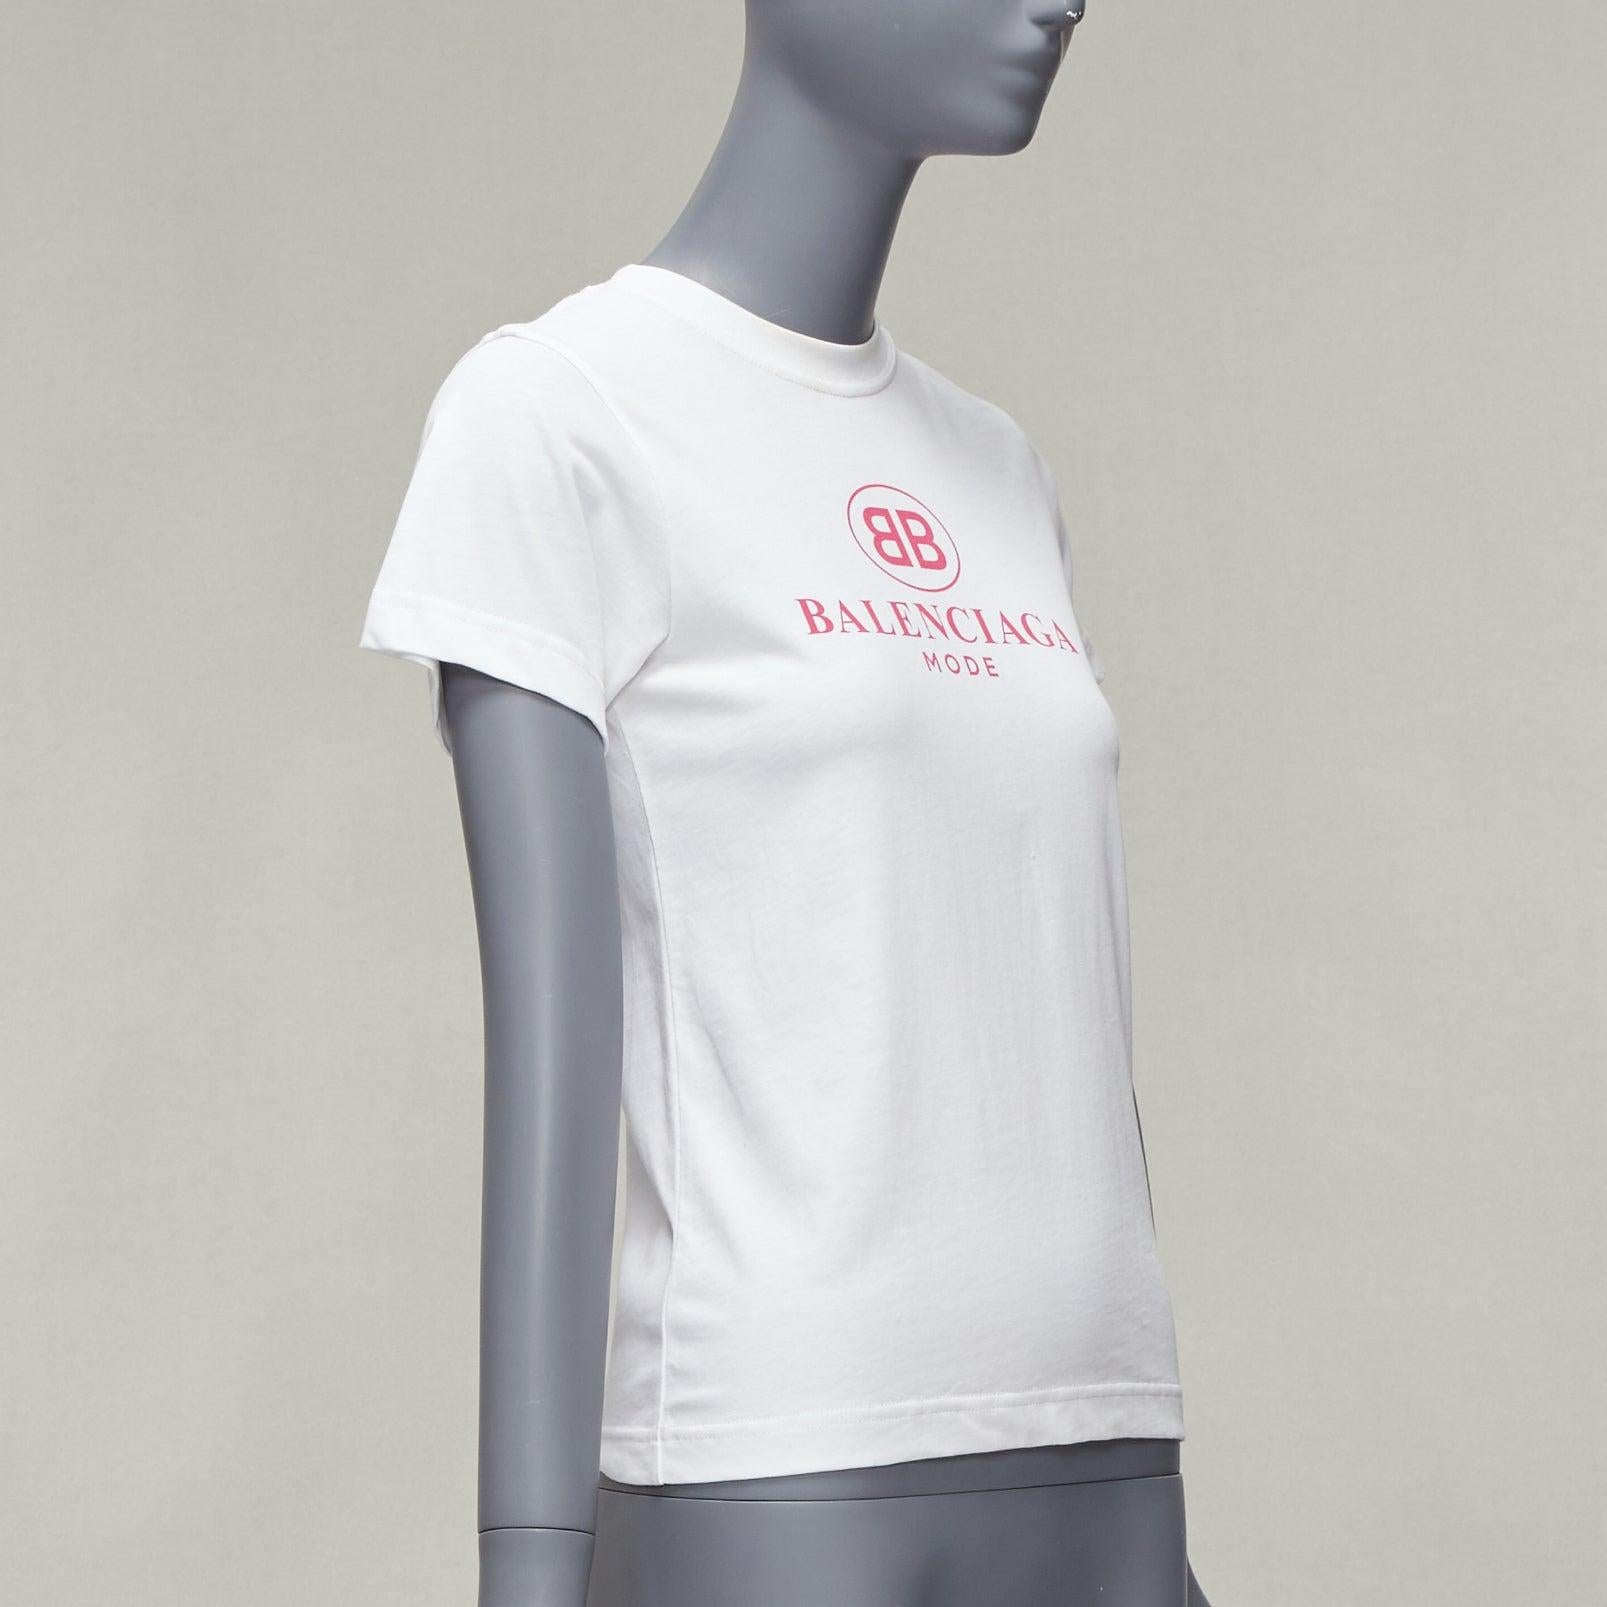 BALENCIAGA 2017 Mode pink logo print short sleeve white cotton tshirt XS In Fair Condition For Sale In Hong Kong, NT